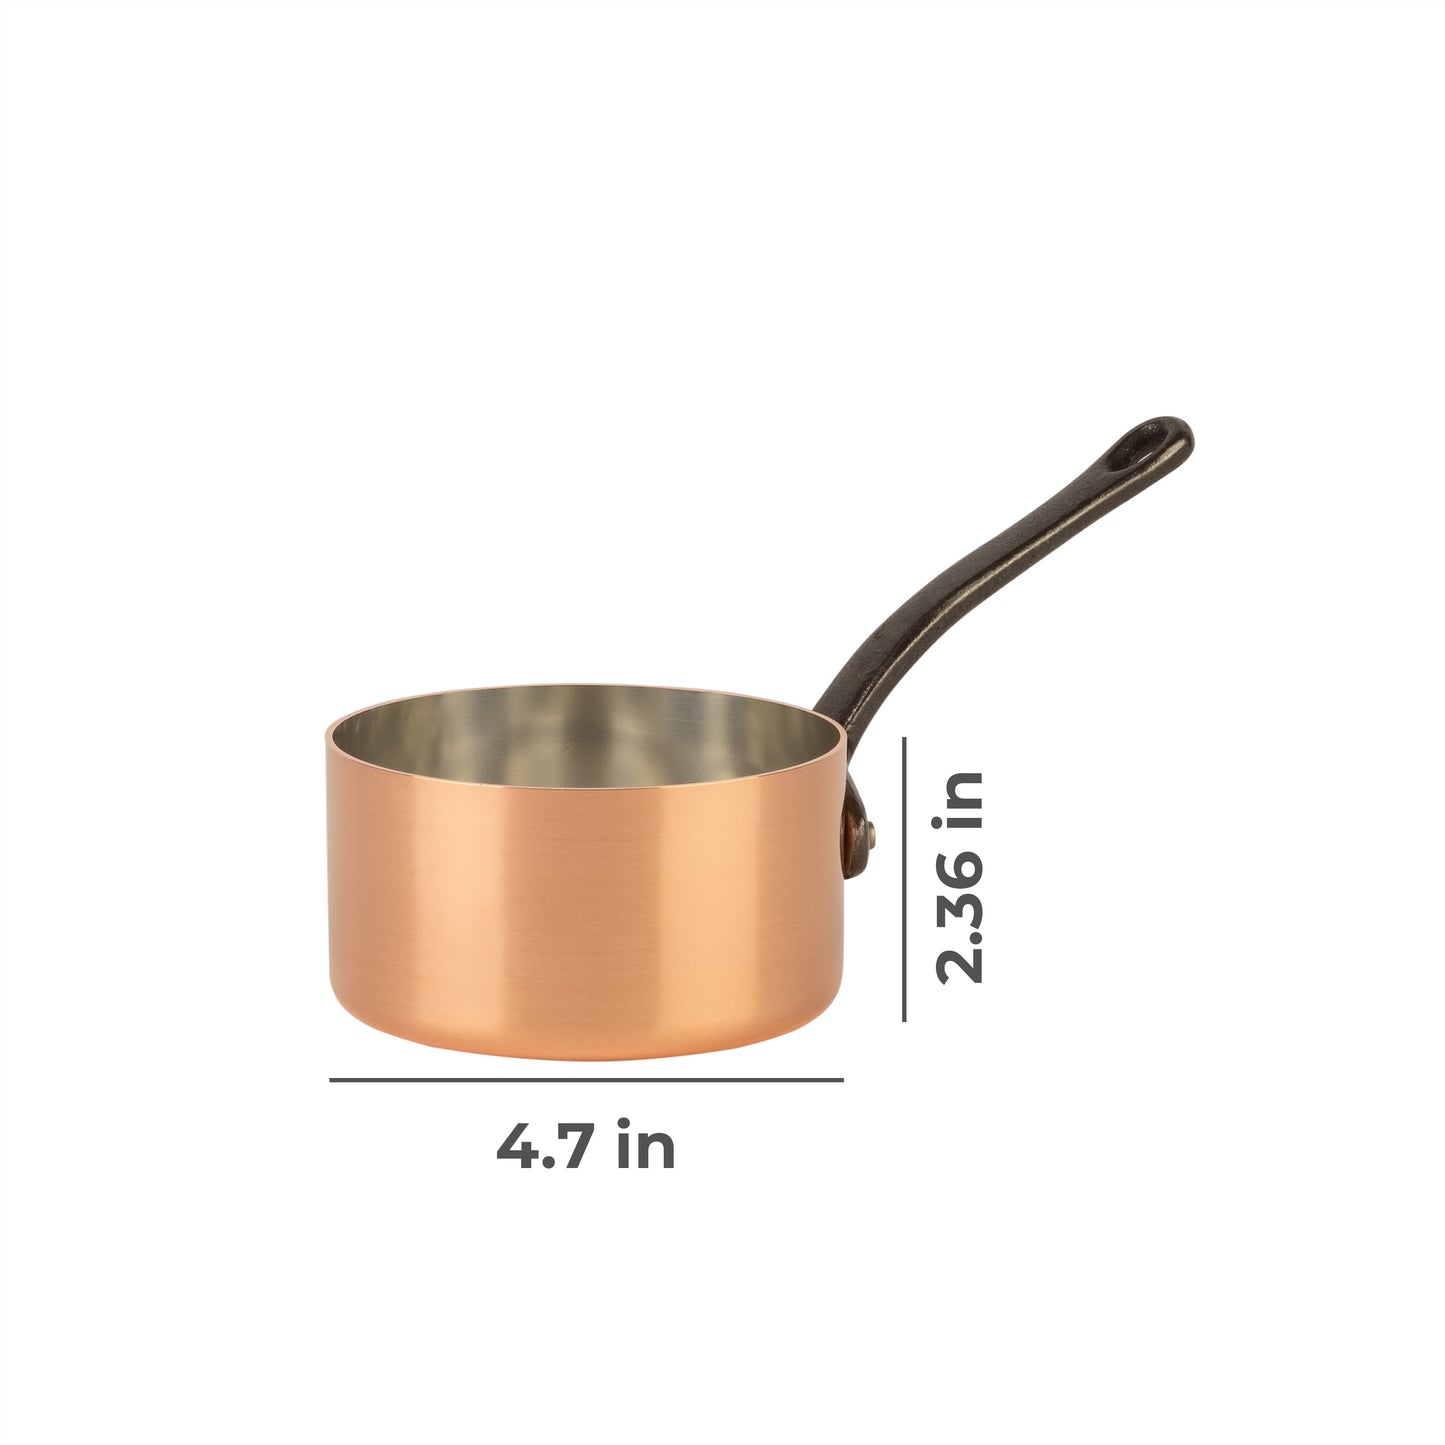 Tinned copper saucepan